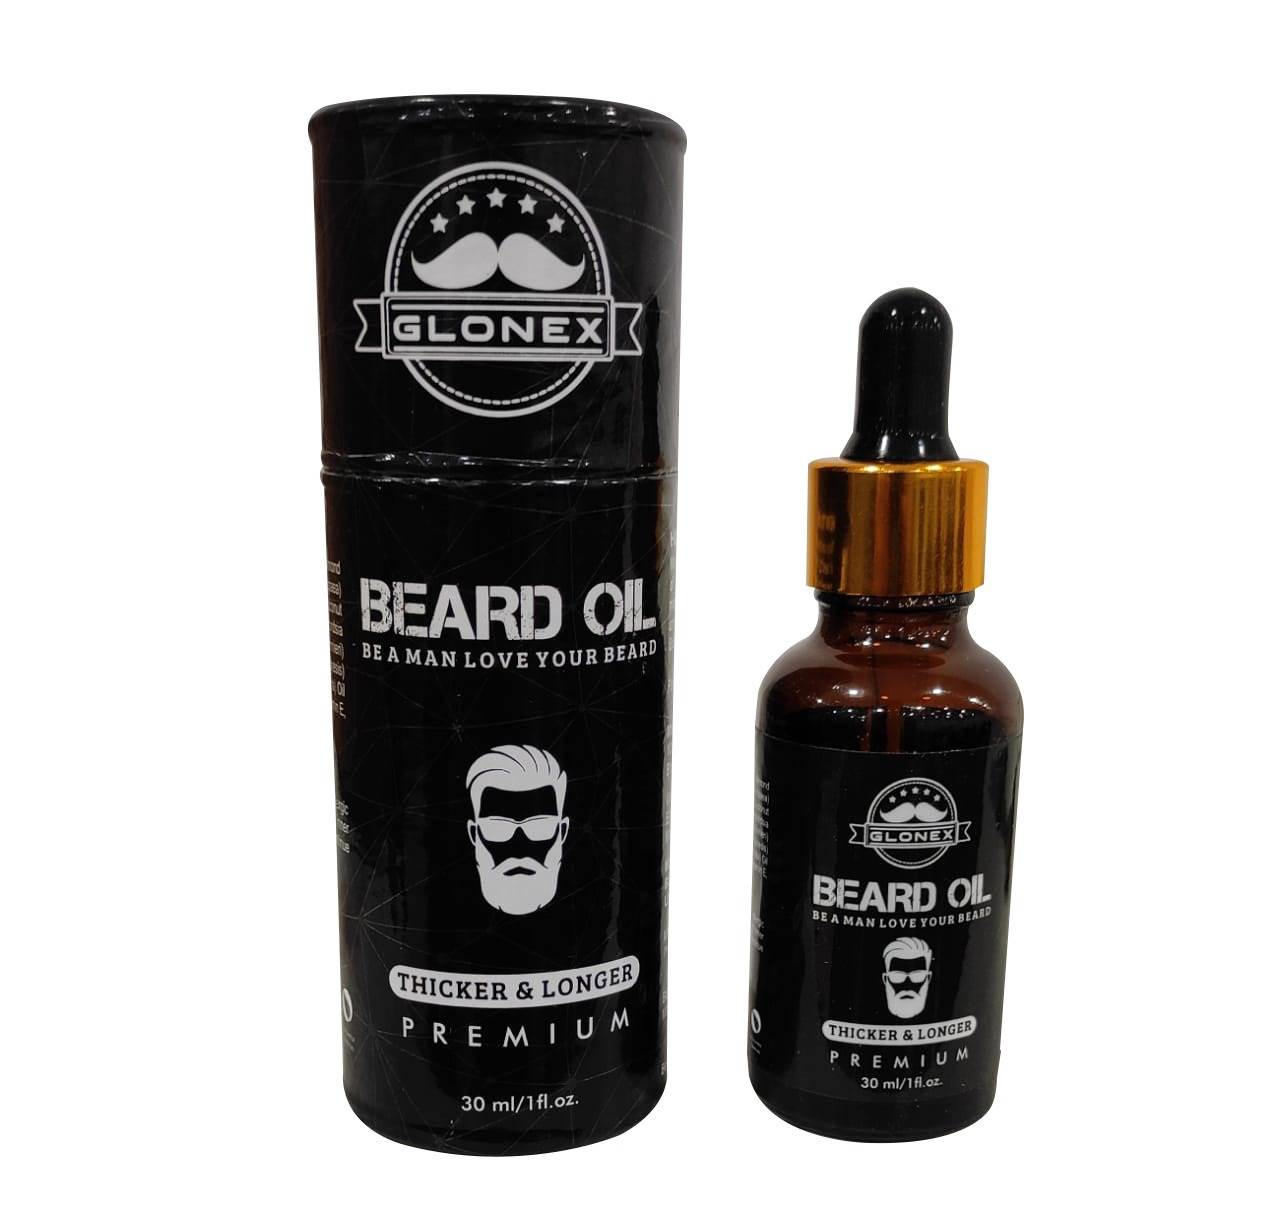 Glonex Beard Oil reviews